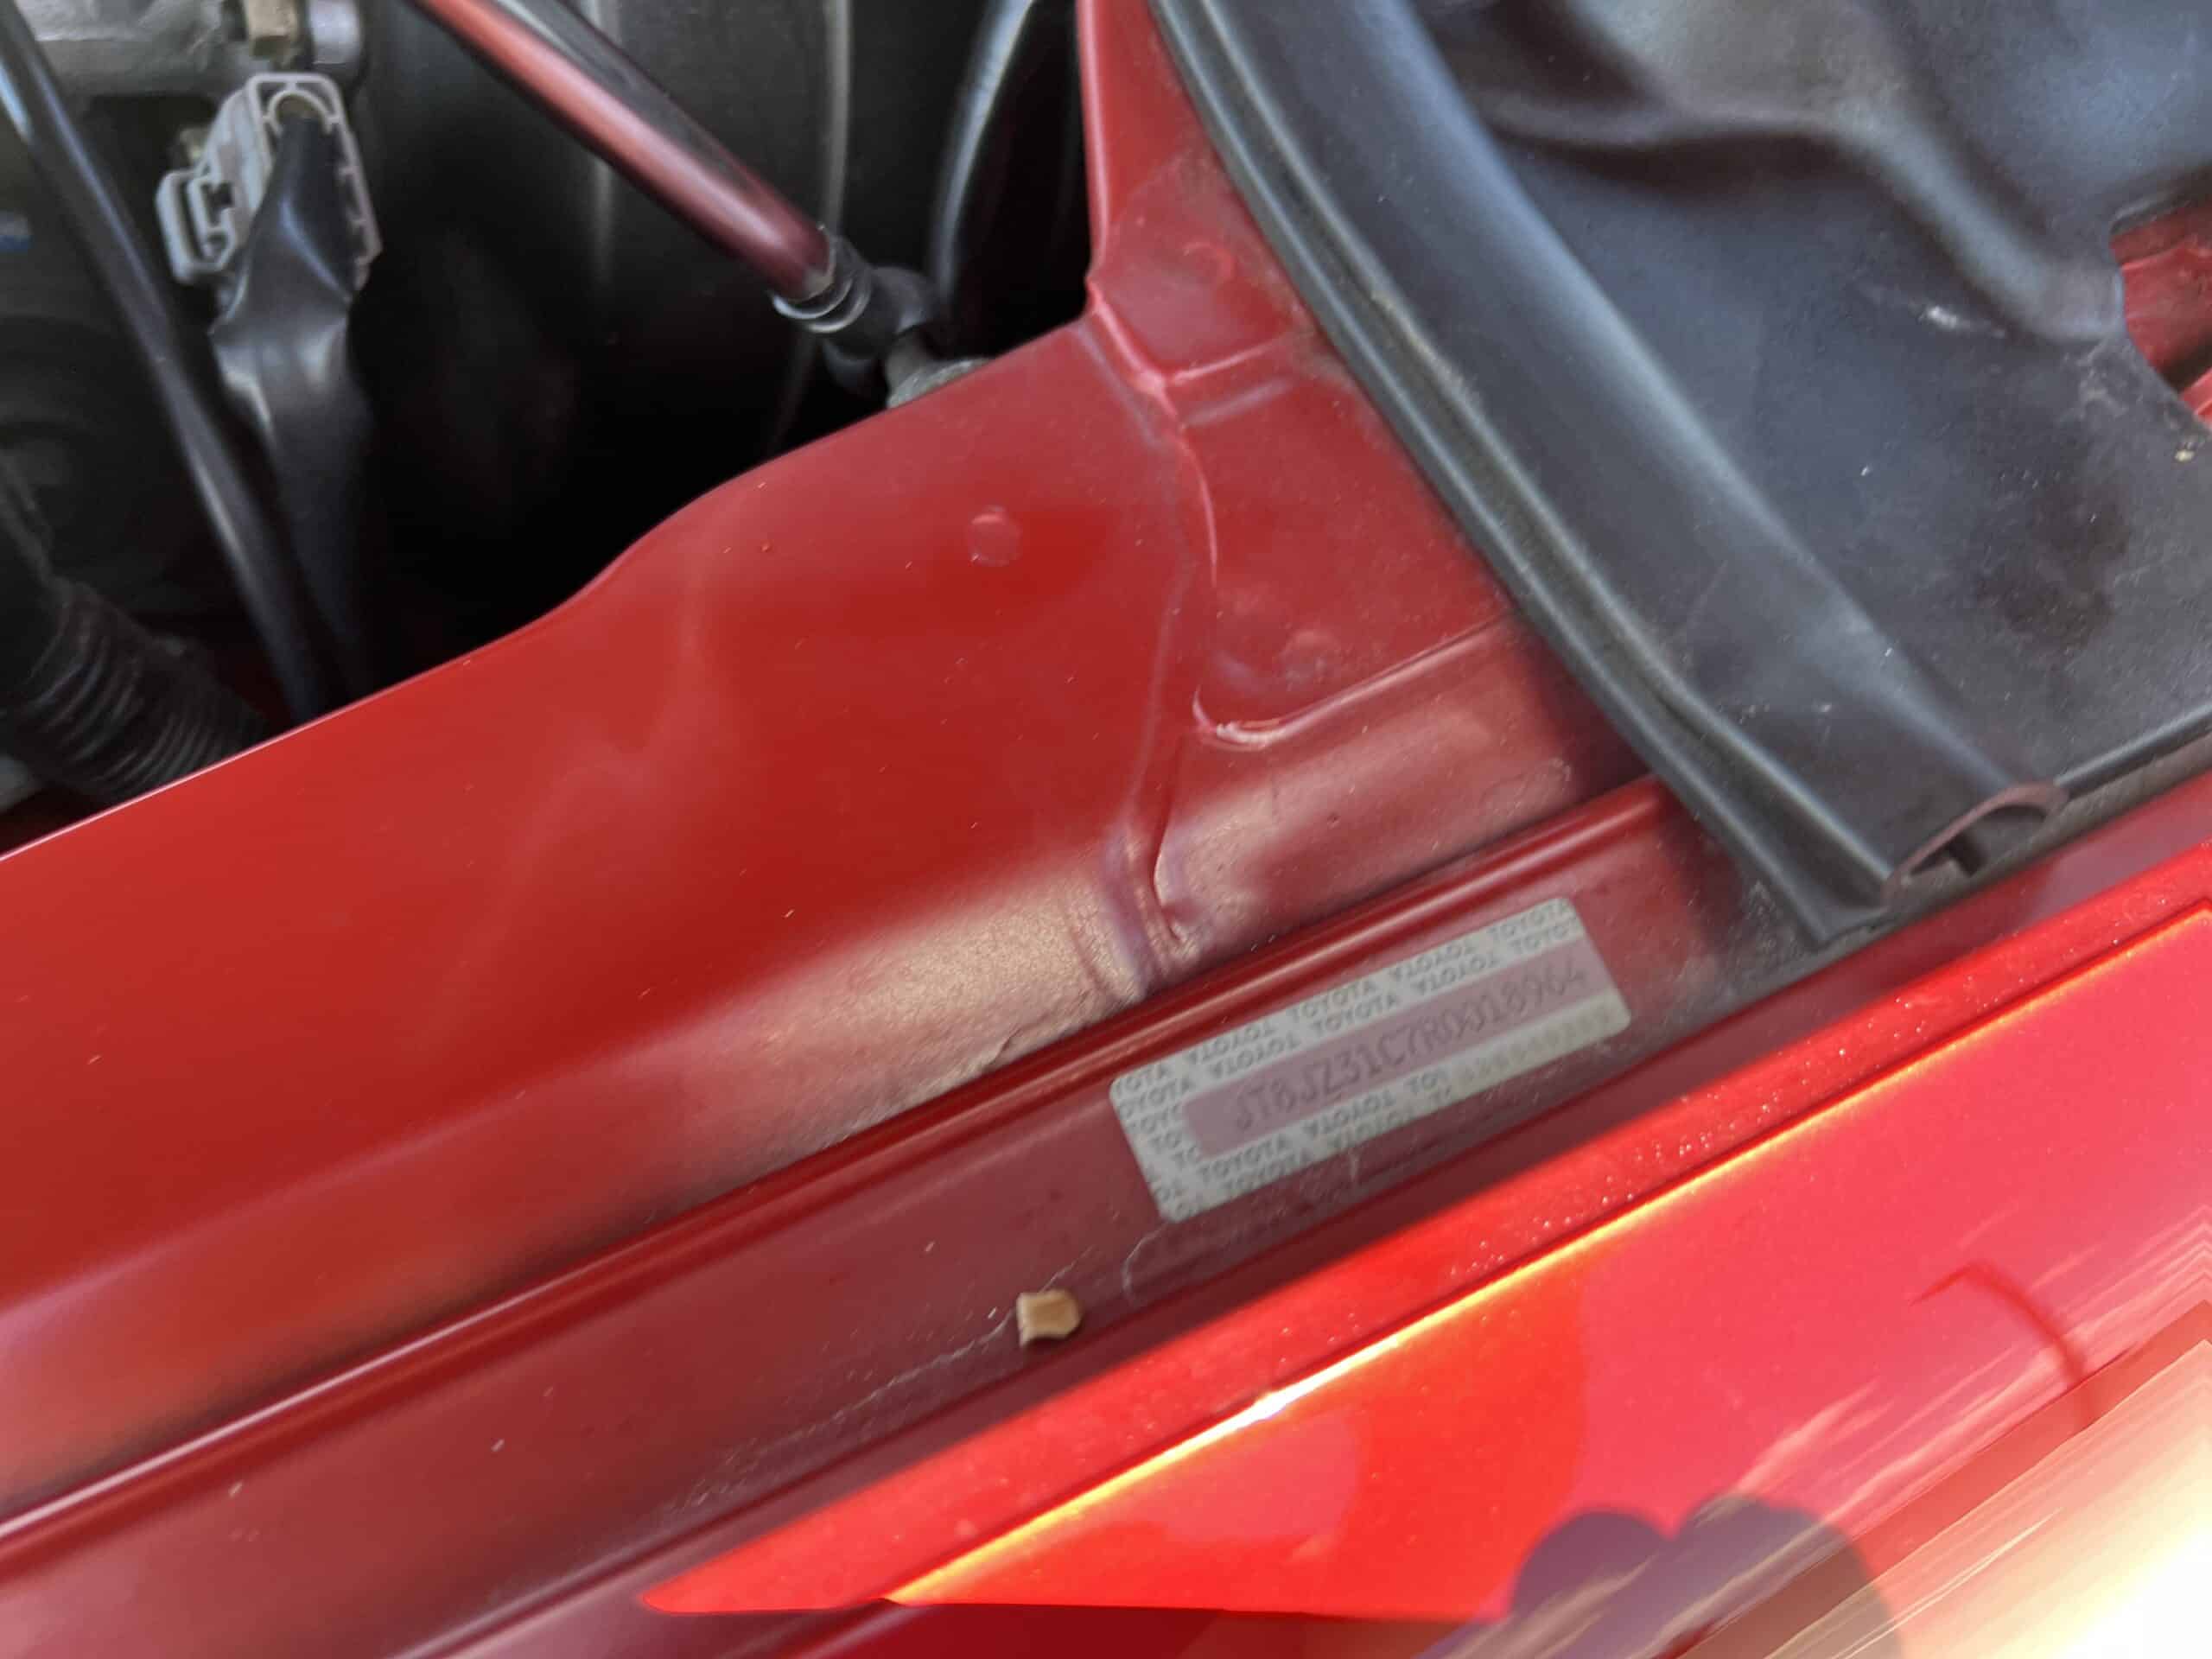 1994 Lexus SC 300 Only 48k Miles – Original Paint – Rare Color Combo – BBS Wheels – Timing belt done